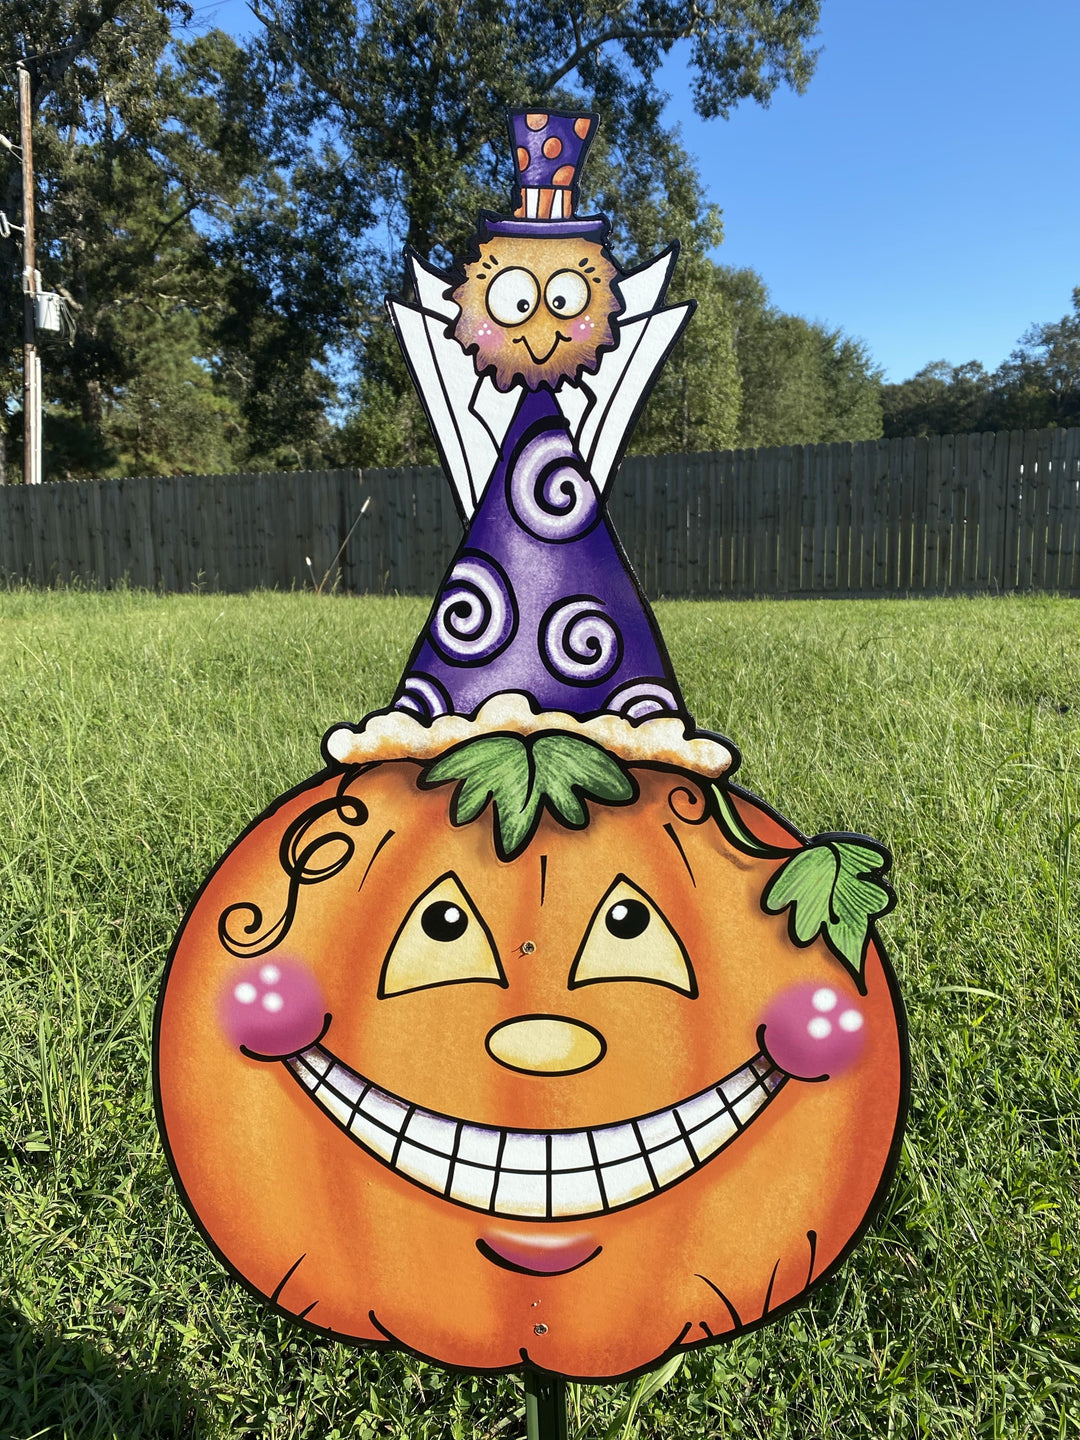 Smiling Pumpkin with Spider Top Hat Yard Art Decoration